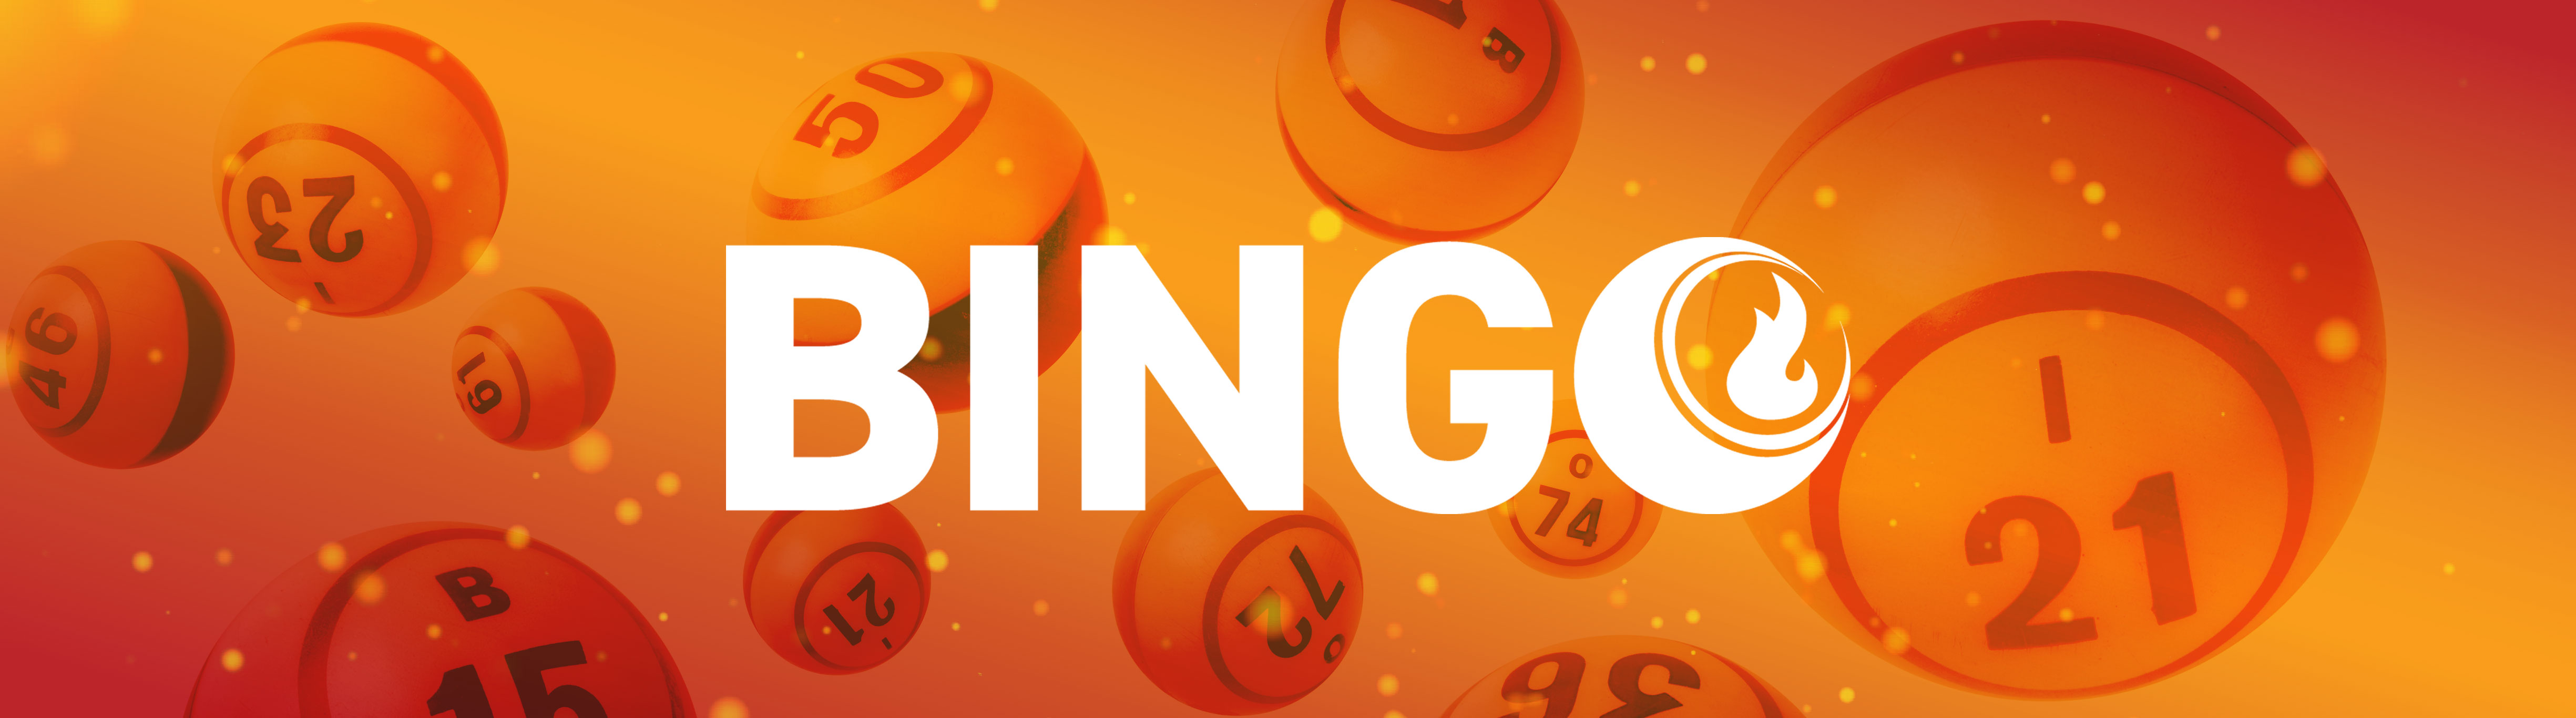 Super King Bingo on the App Store